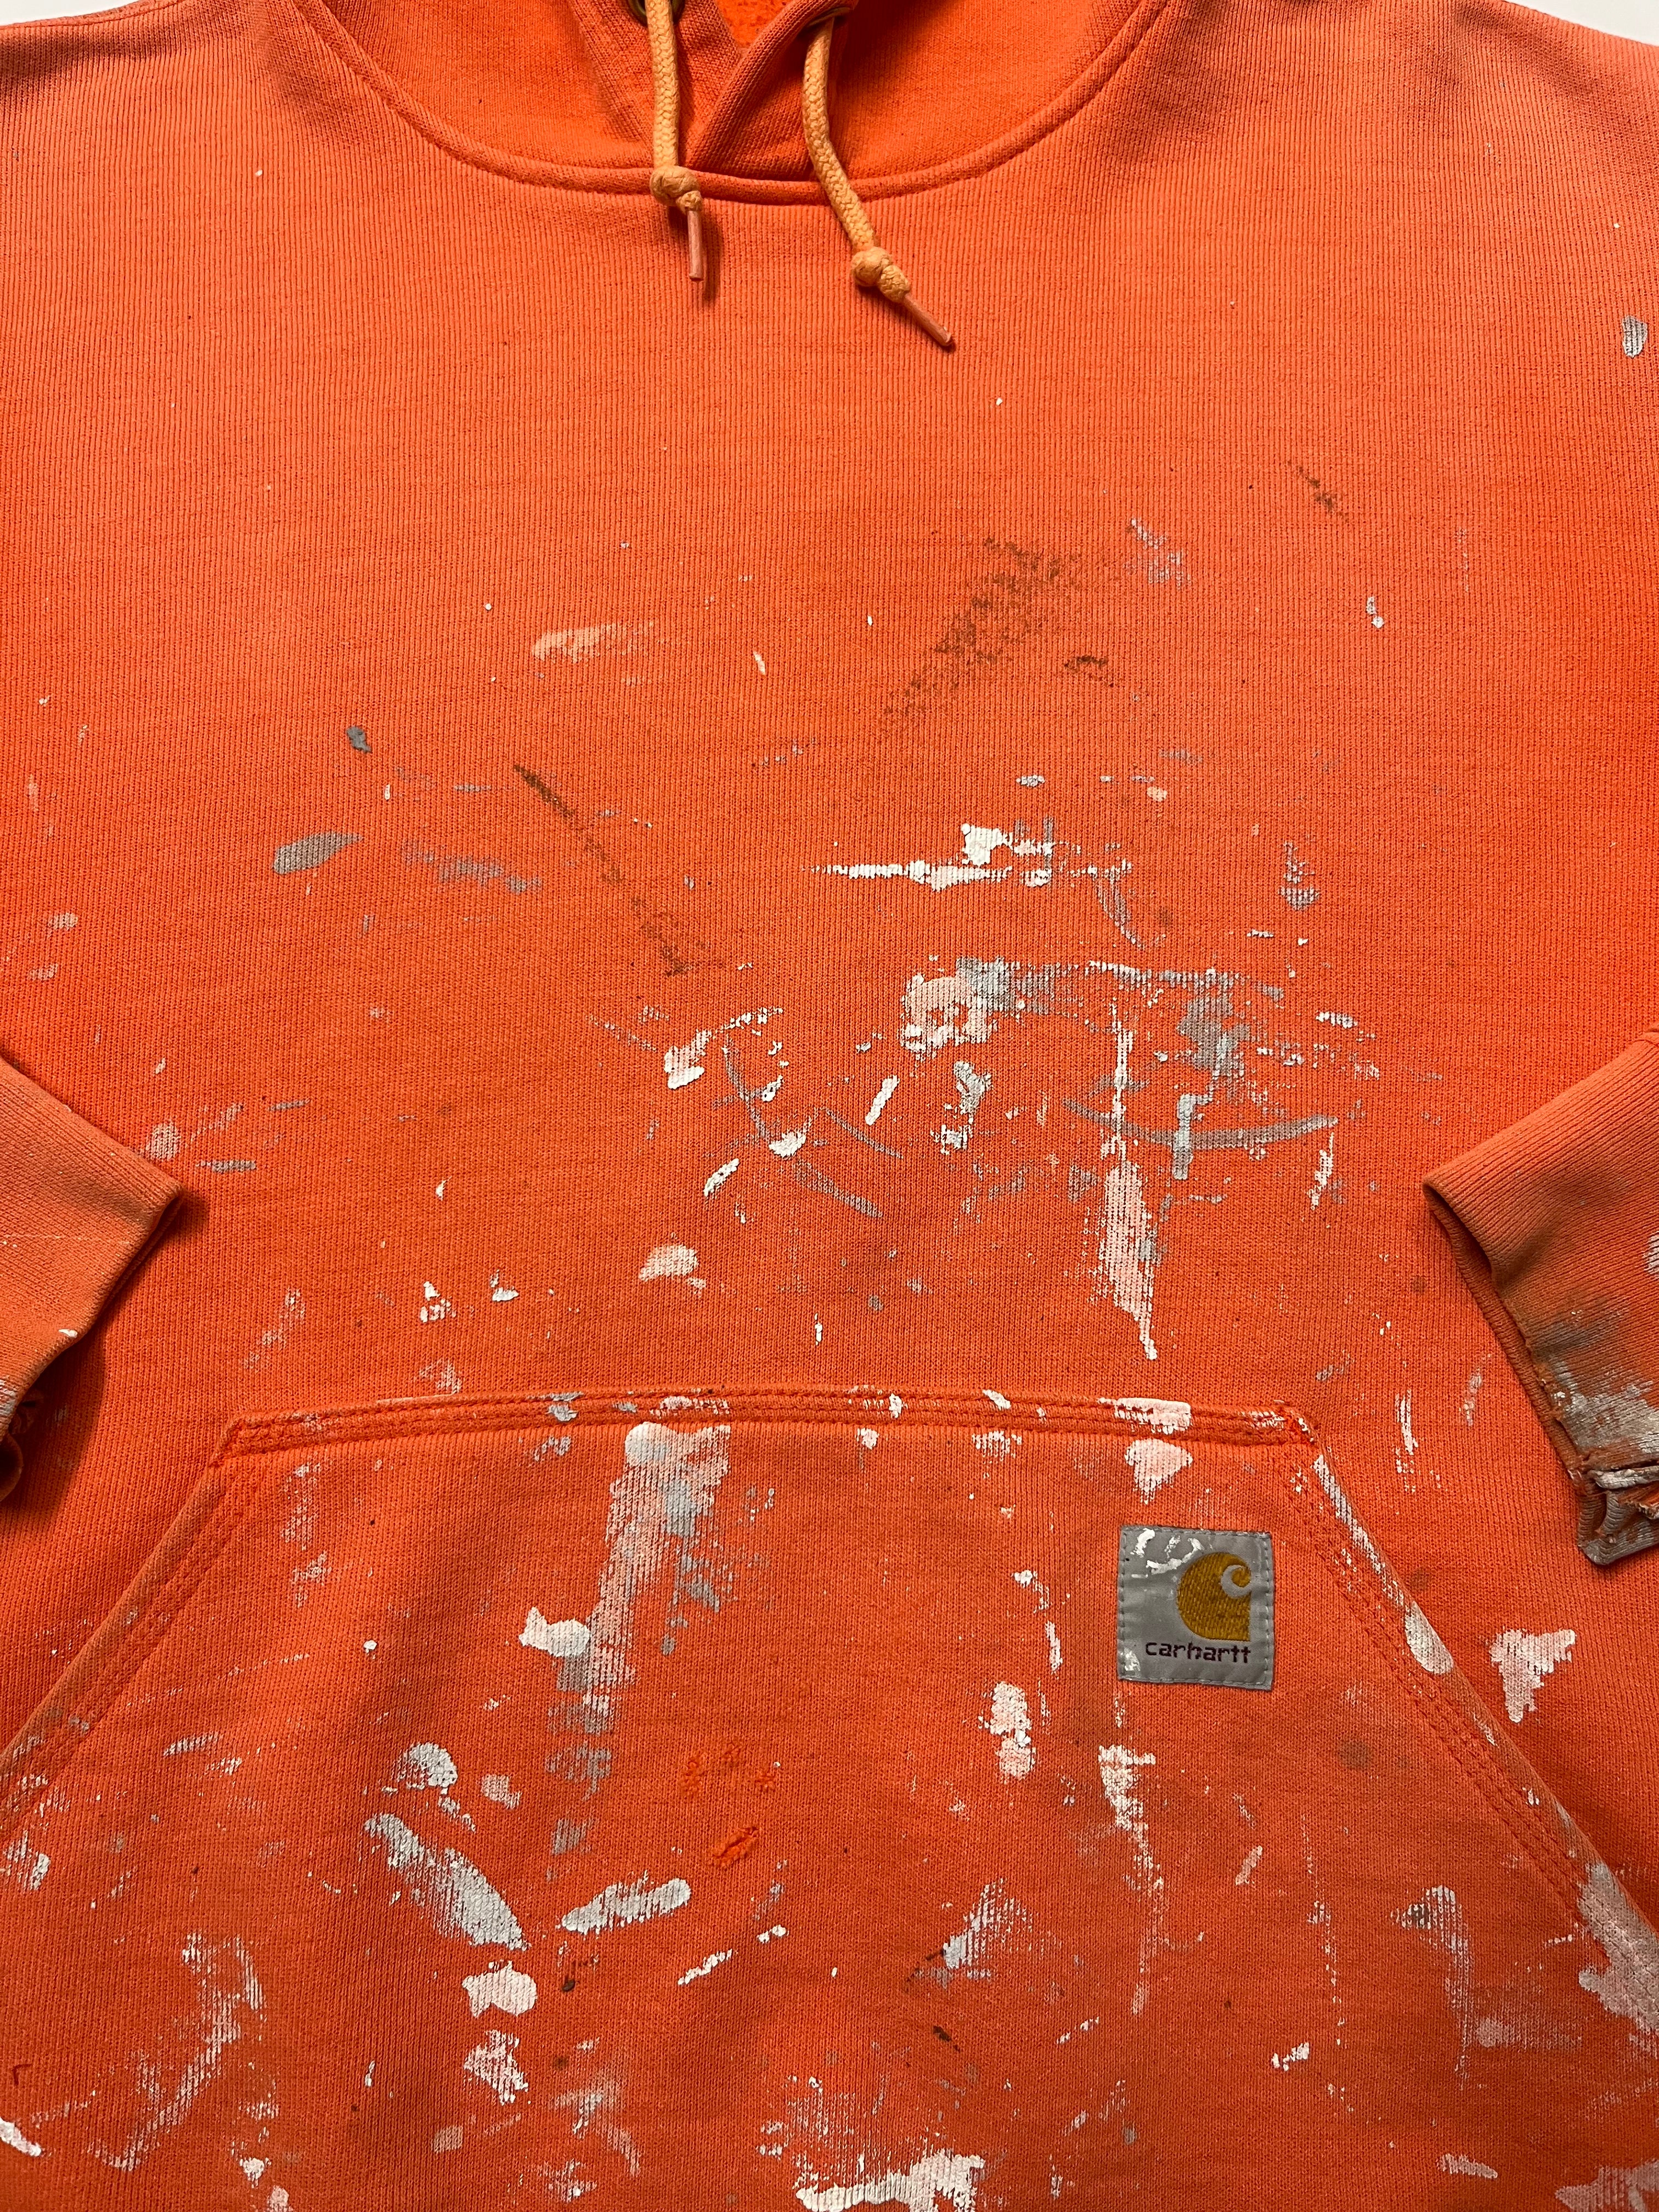 ‘00s Distressed Carhartt Painter Hooded Sweatshirt - Faded Sunkist Orange - S/M/L